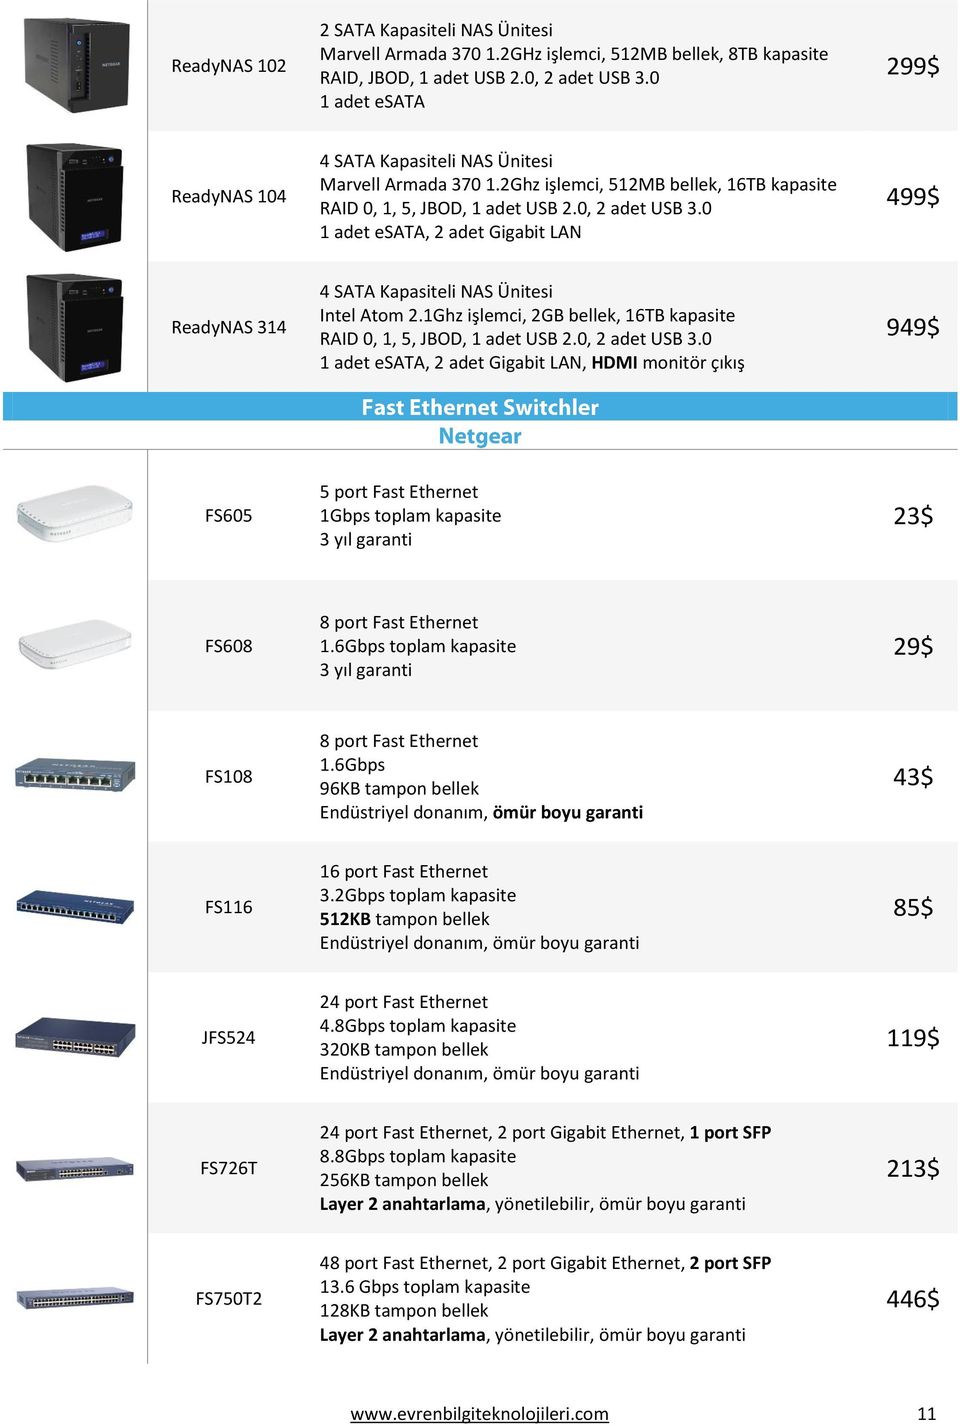 0 1 adet esata, 2 adet Gigabit LAN 499$ ReadyNAS 314 4 SATA Kapasiteli NAS Ünitesi Intel Atom 2.1Ghz işlemci, 2GB bellek, 16TB kapasite RAID 0, 1, 5, JBOD, 1 adet USB 2.0, 2 adet USB 3.